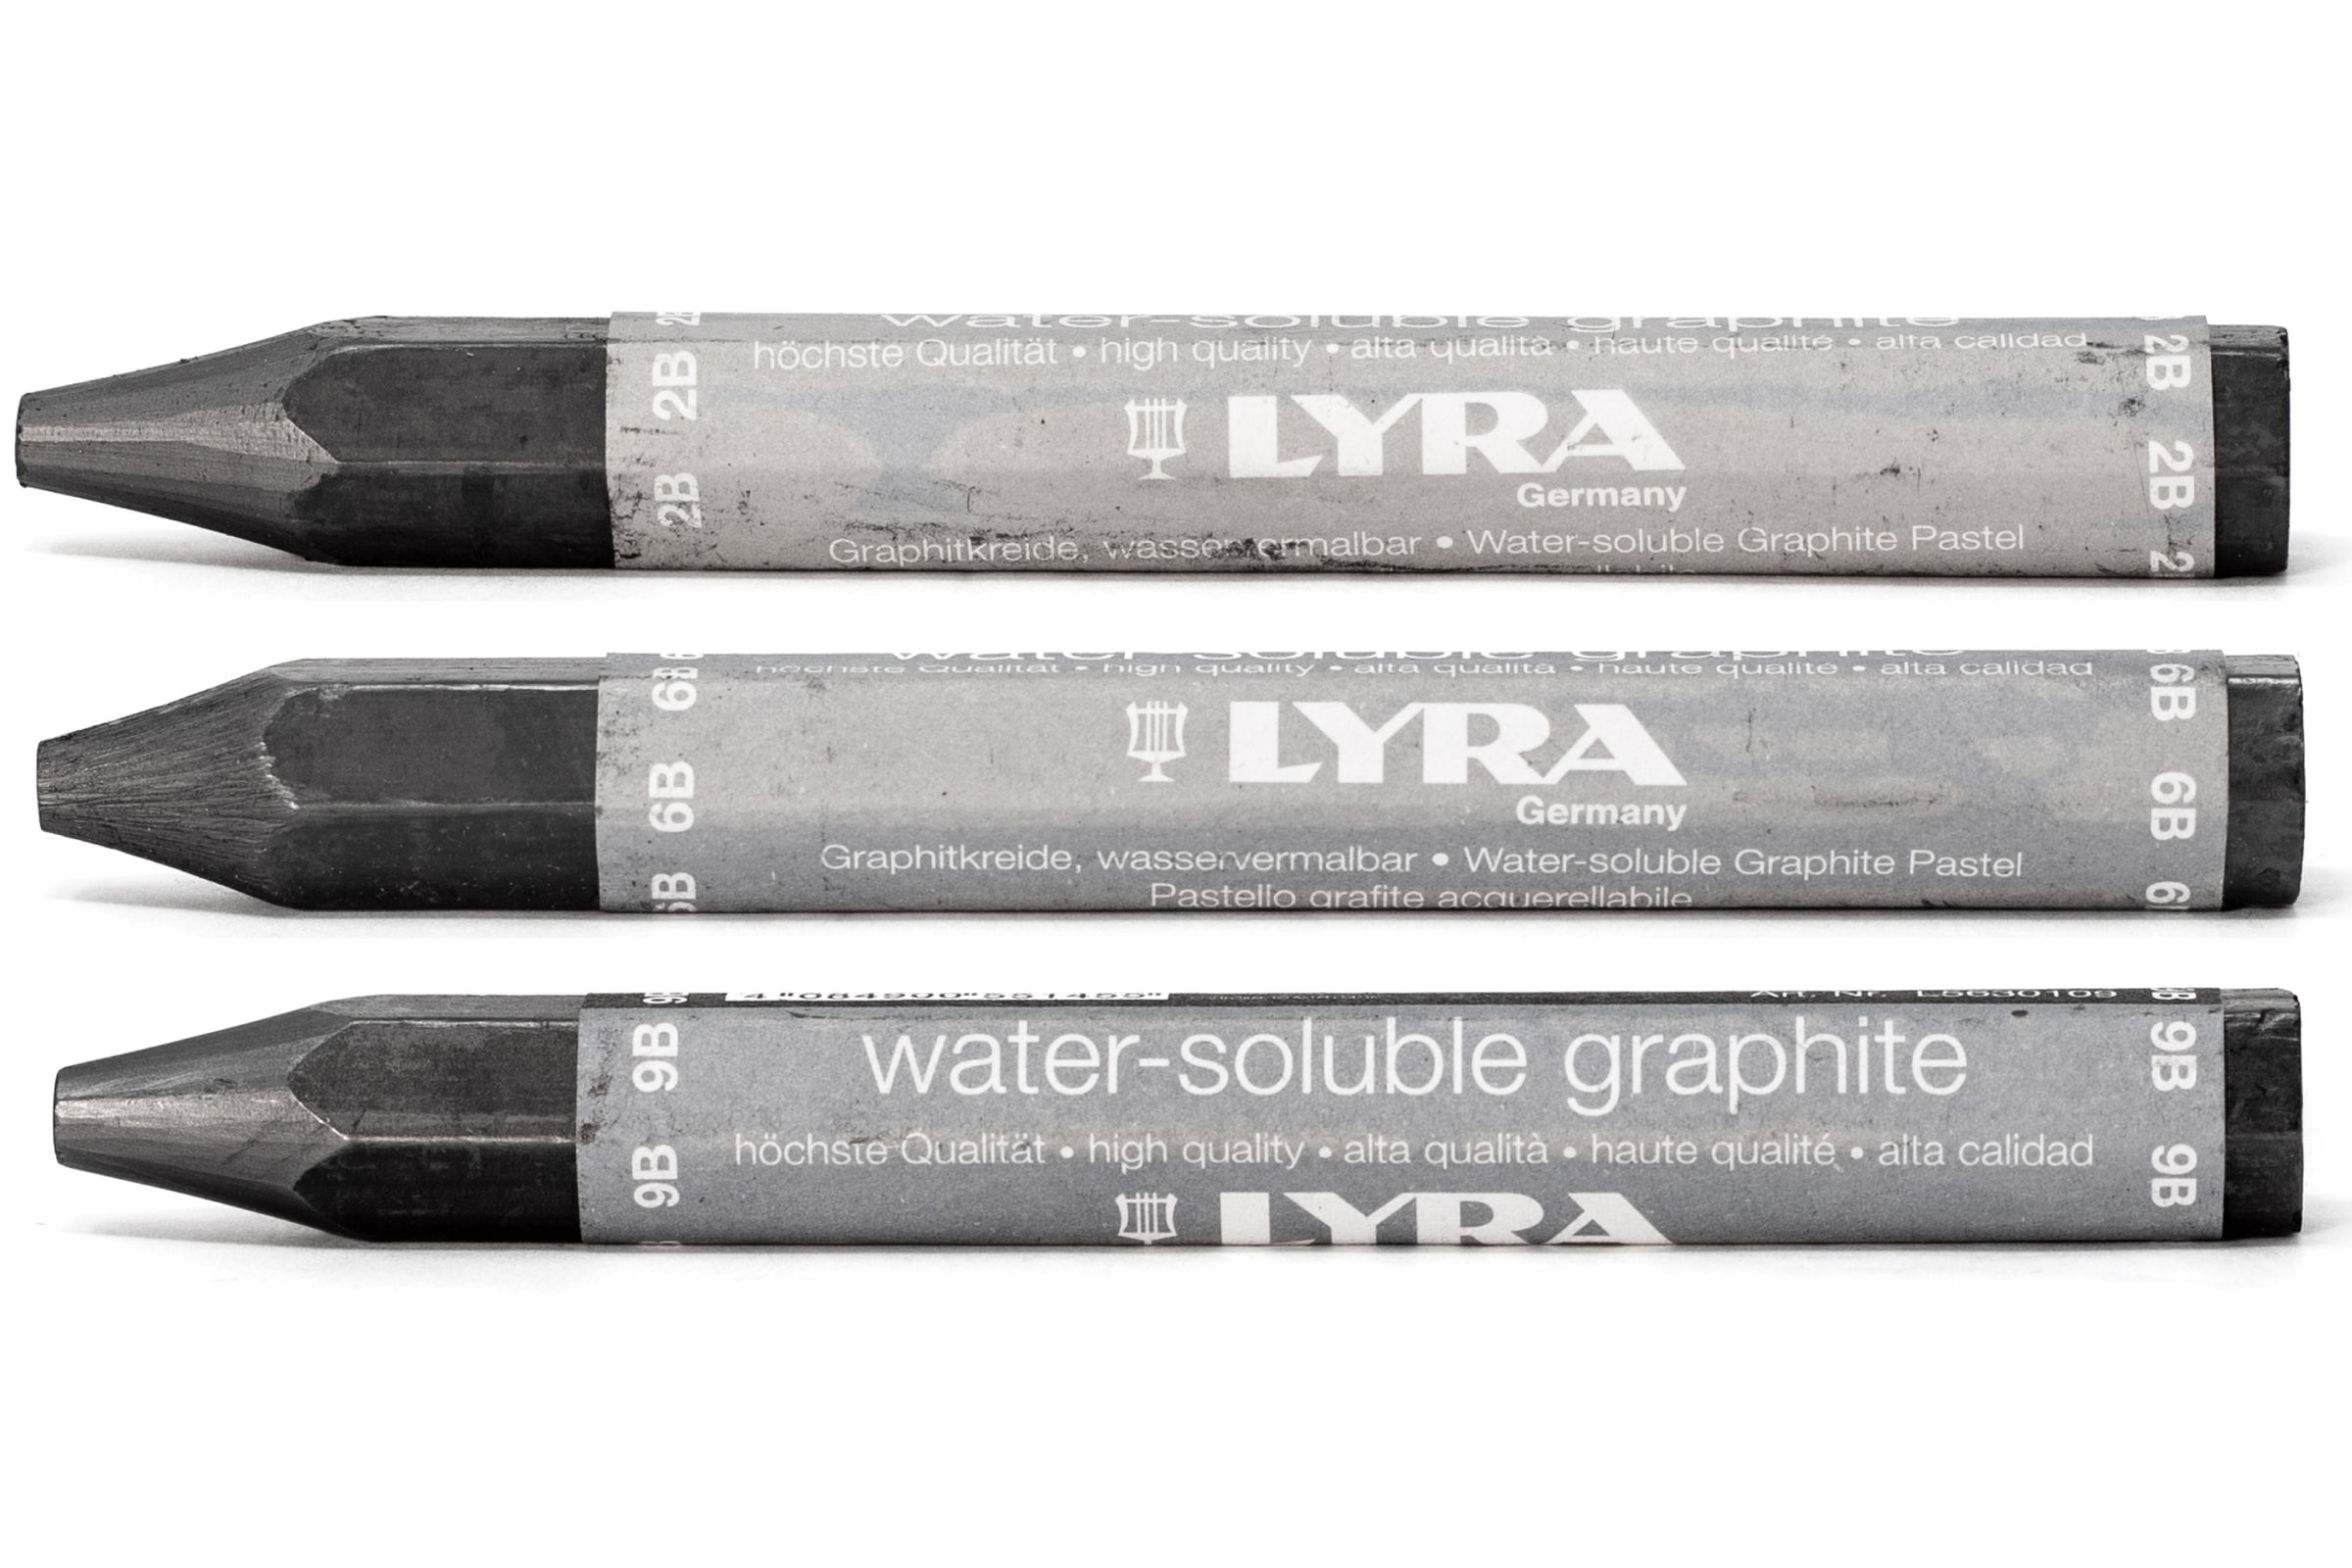 Lyra Graphite Crayon, Water-Soluble, 9b